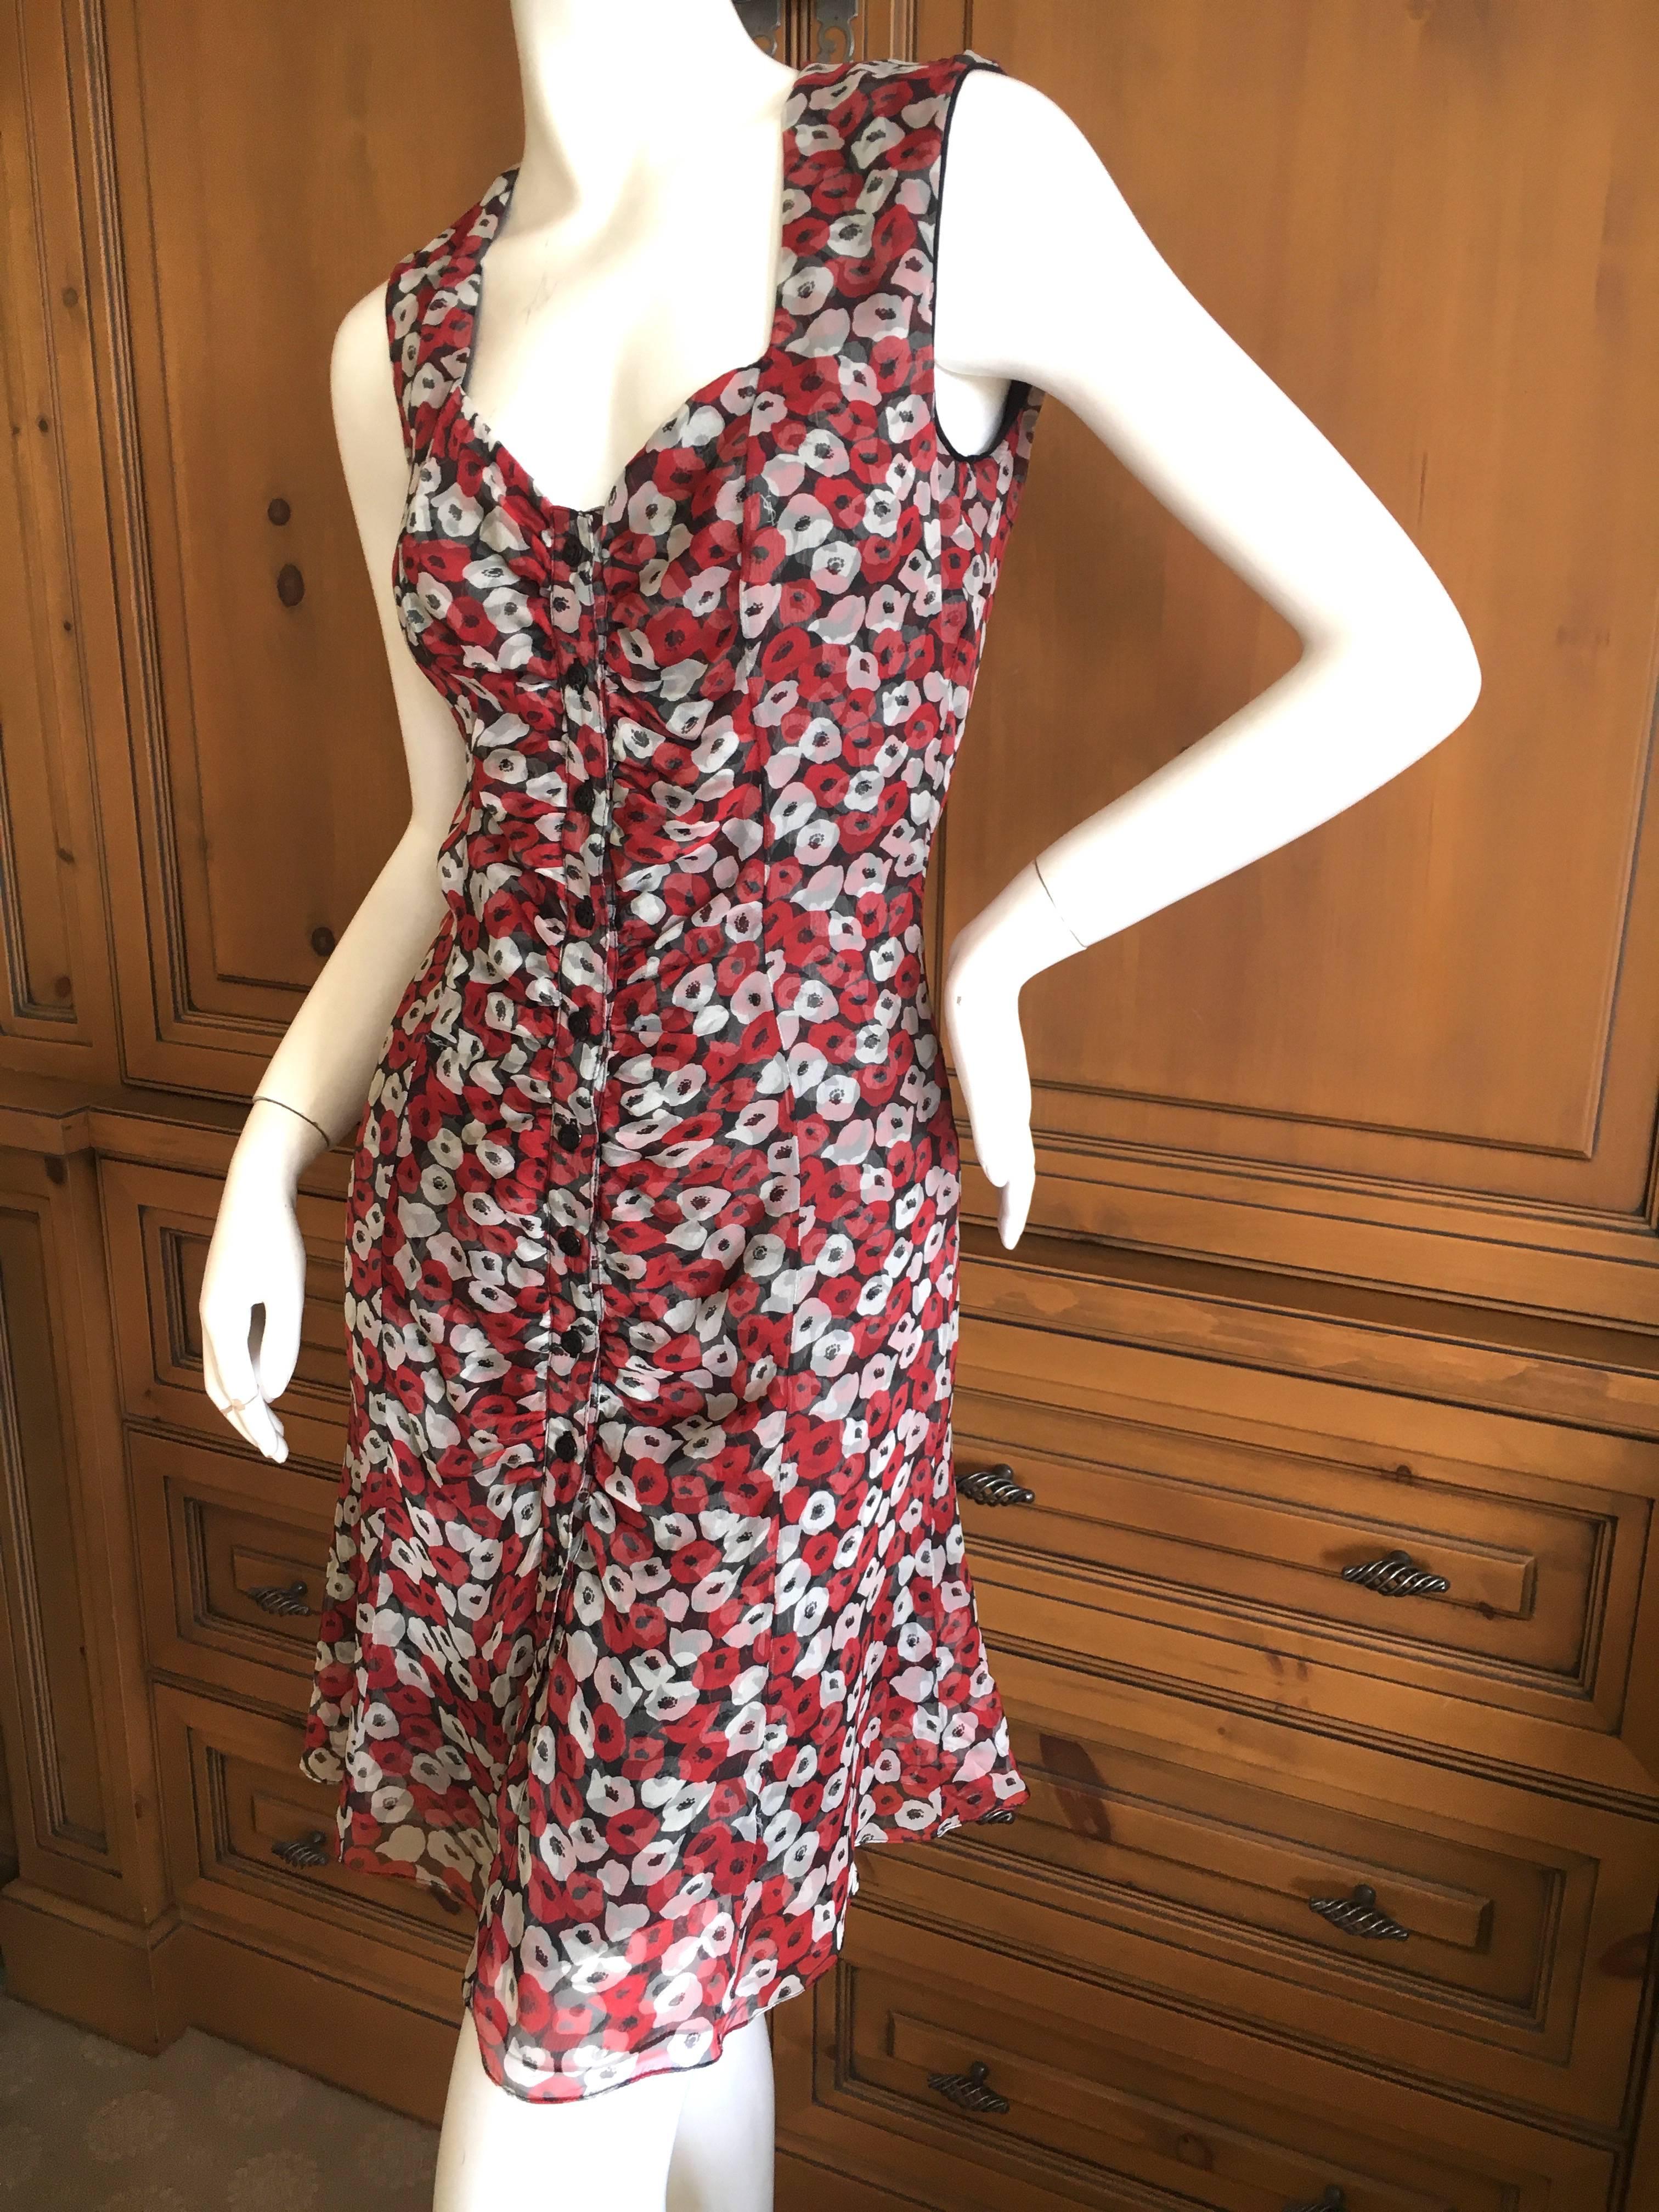 Yves Saint Laurent Rive Gauche Poppy Print Sun Dress.
So sweet,buttons up the front.
Size 36
Bust 36"
Waist 26"
Hips 40"
Length 36"
Excellent condition